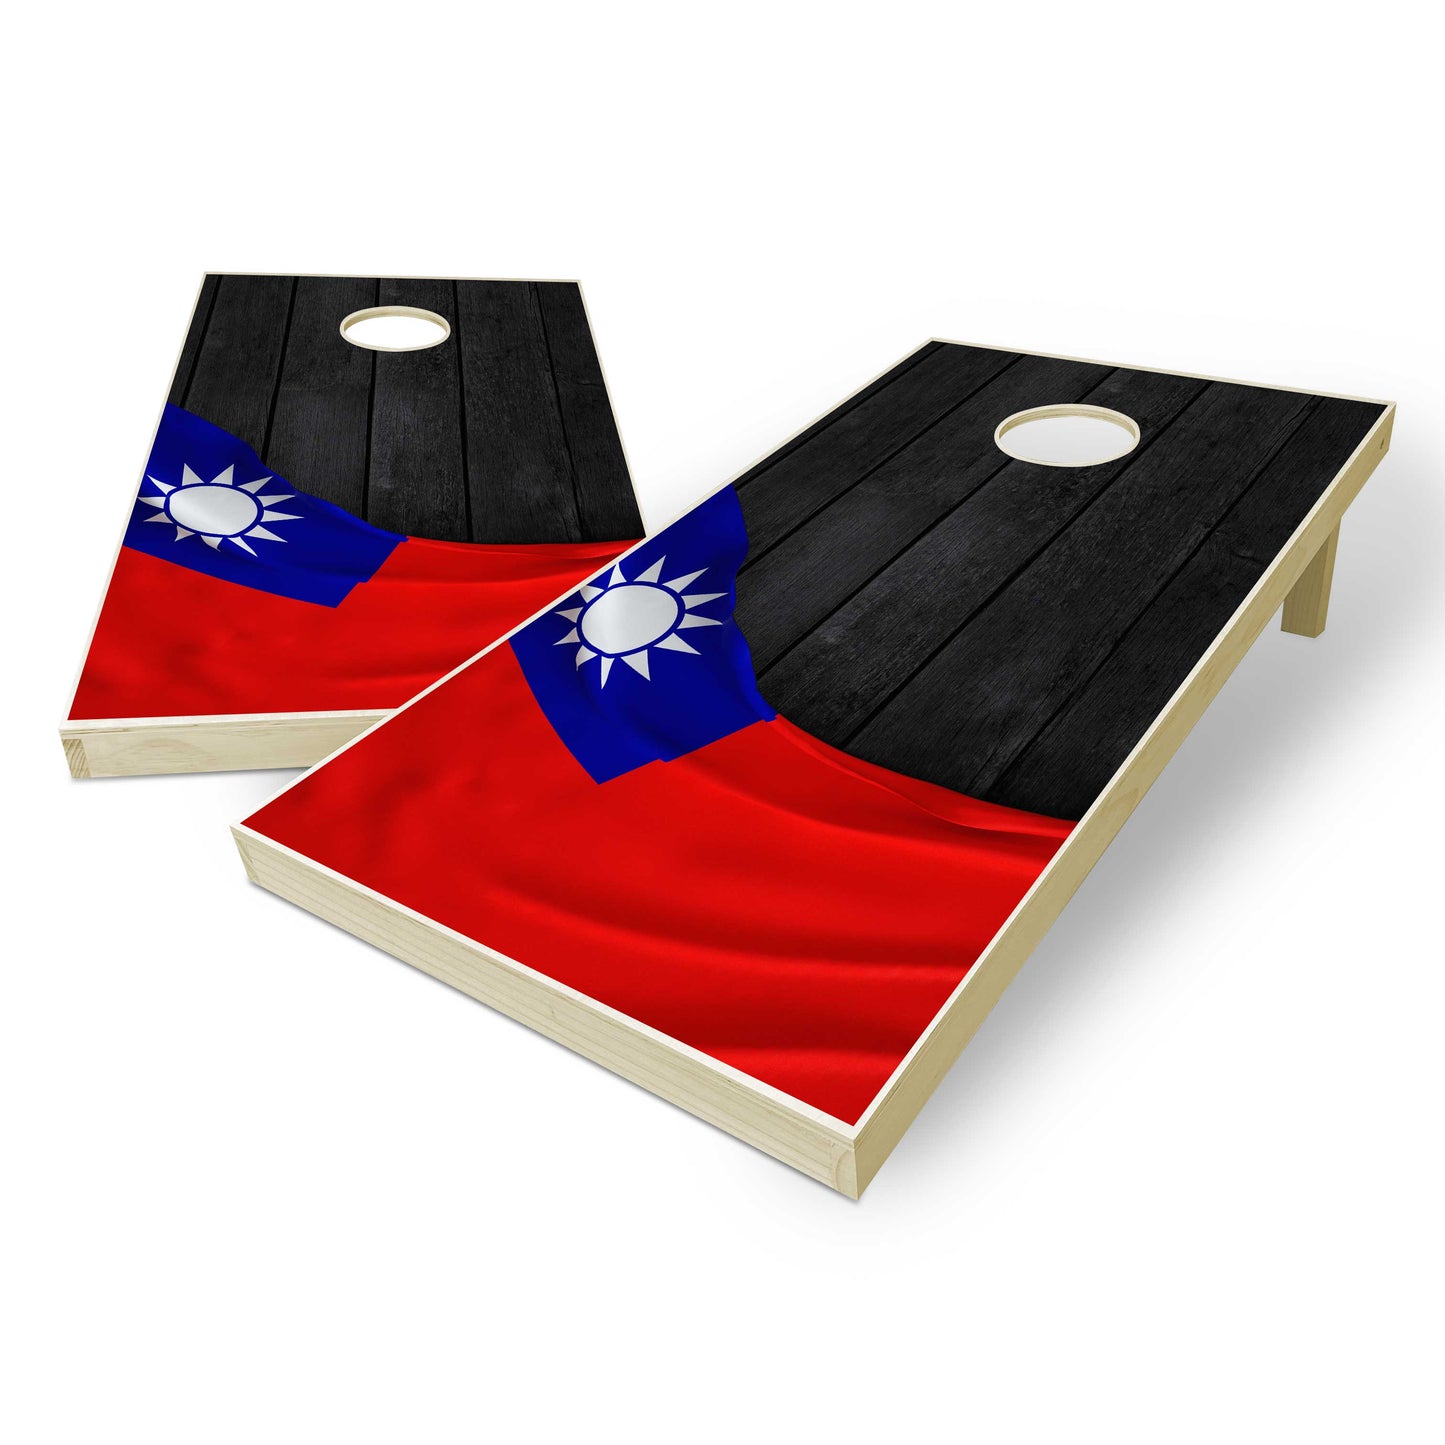 Taiwan Flag Cornhole Set - Black Wood